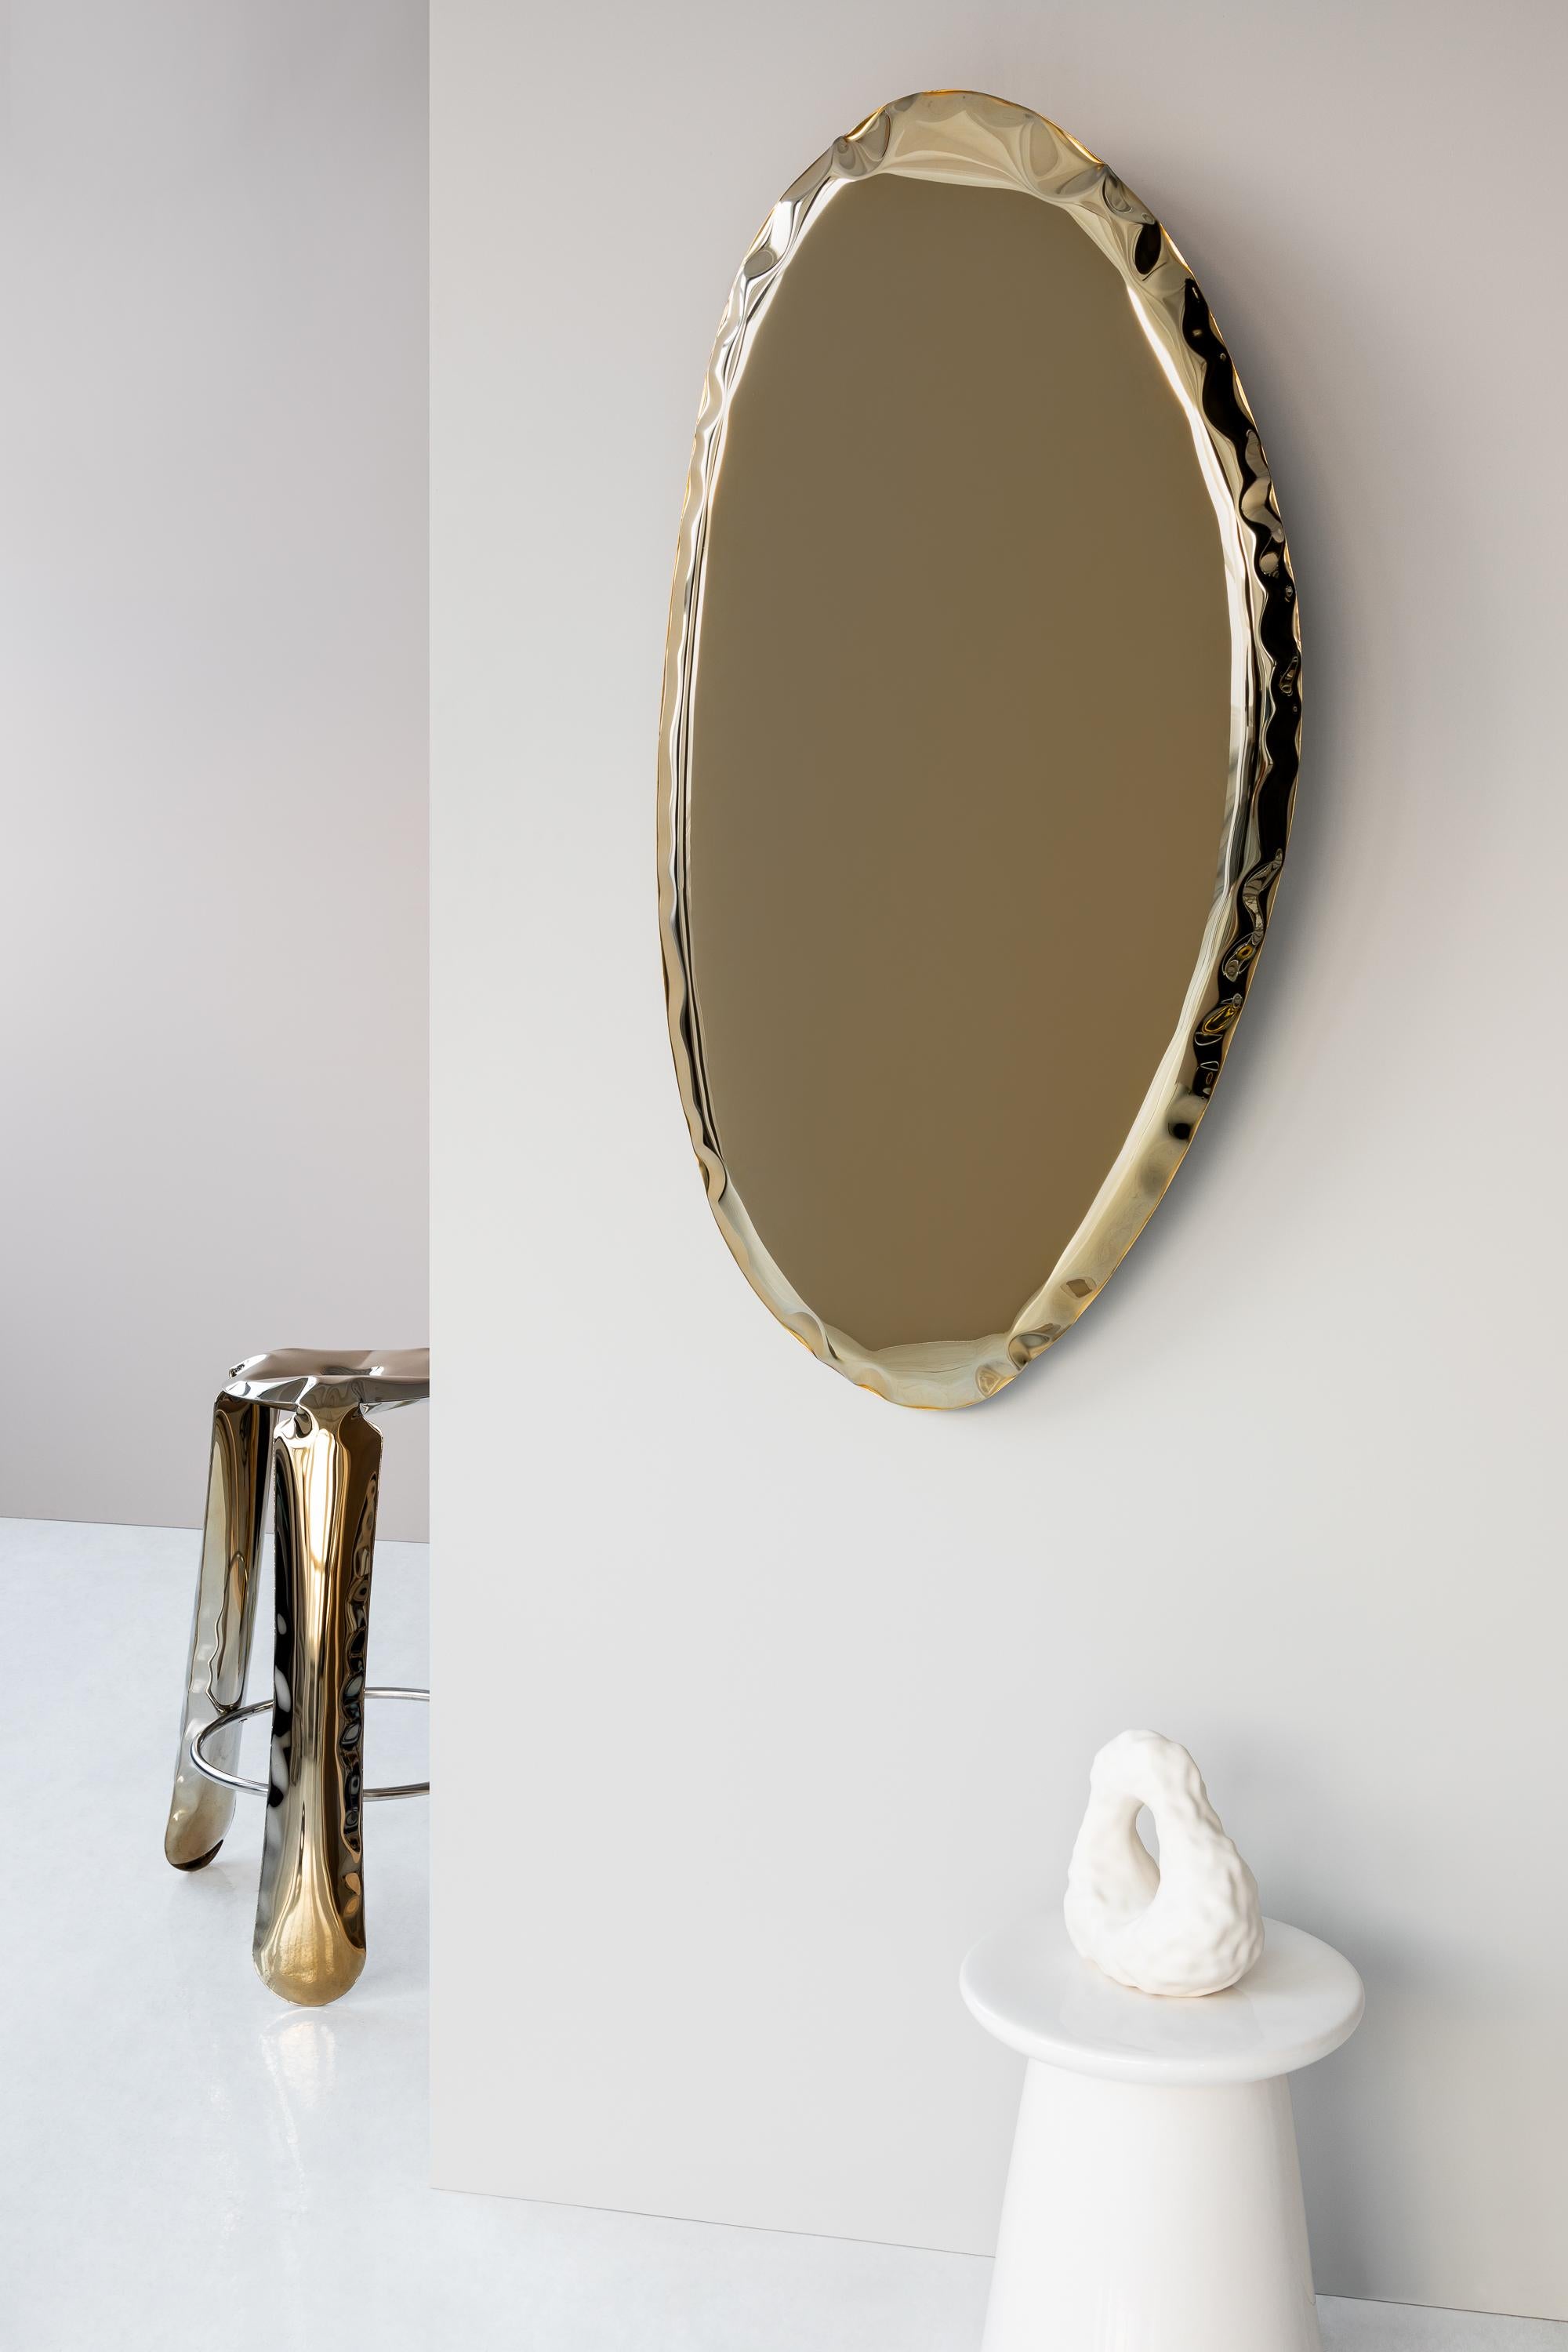 Blue Matt Tafla O4 Wall Mirror by Zieta In New Condition For Sale In Geneve, CH